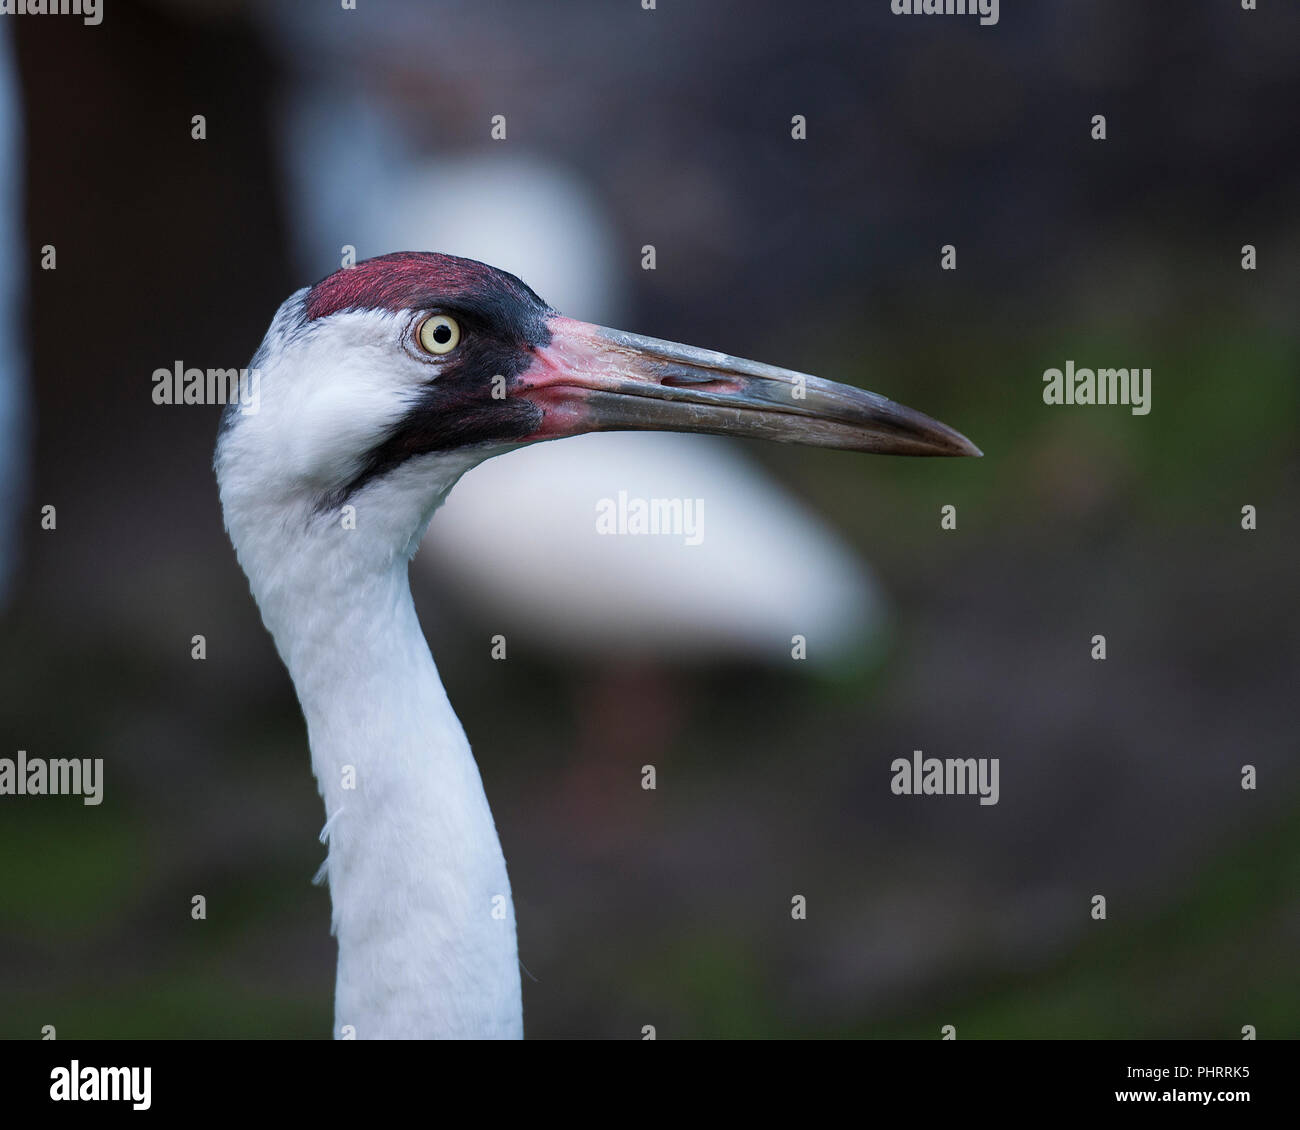 Whooping Crane bird close up enjoying its surrounding. Stock Photo